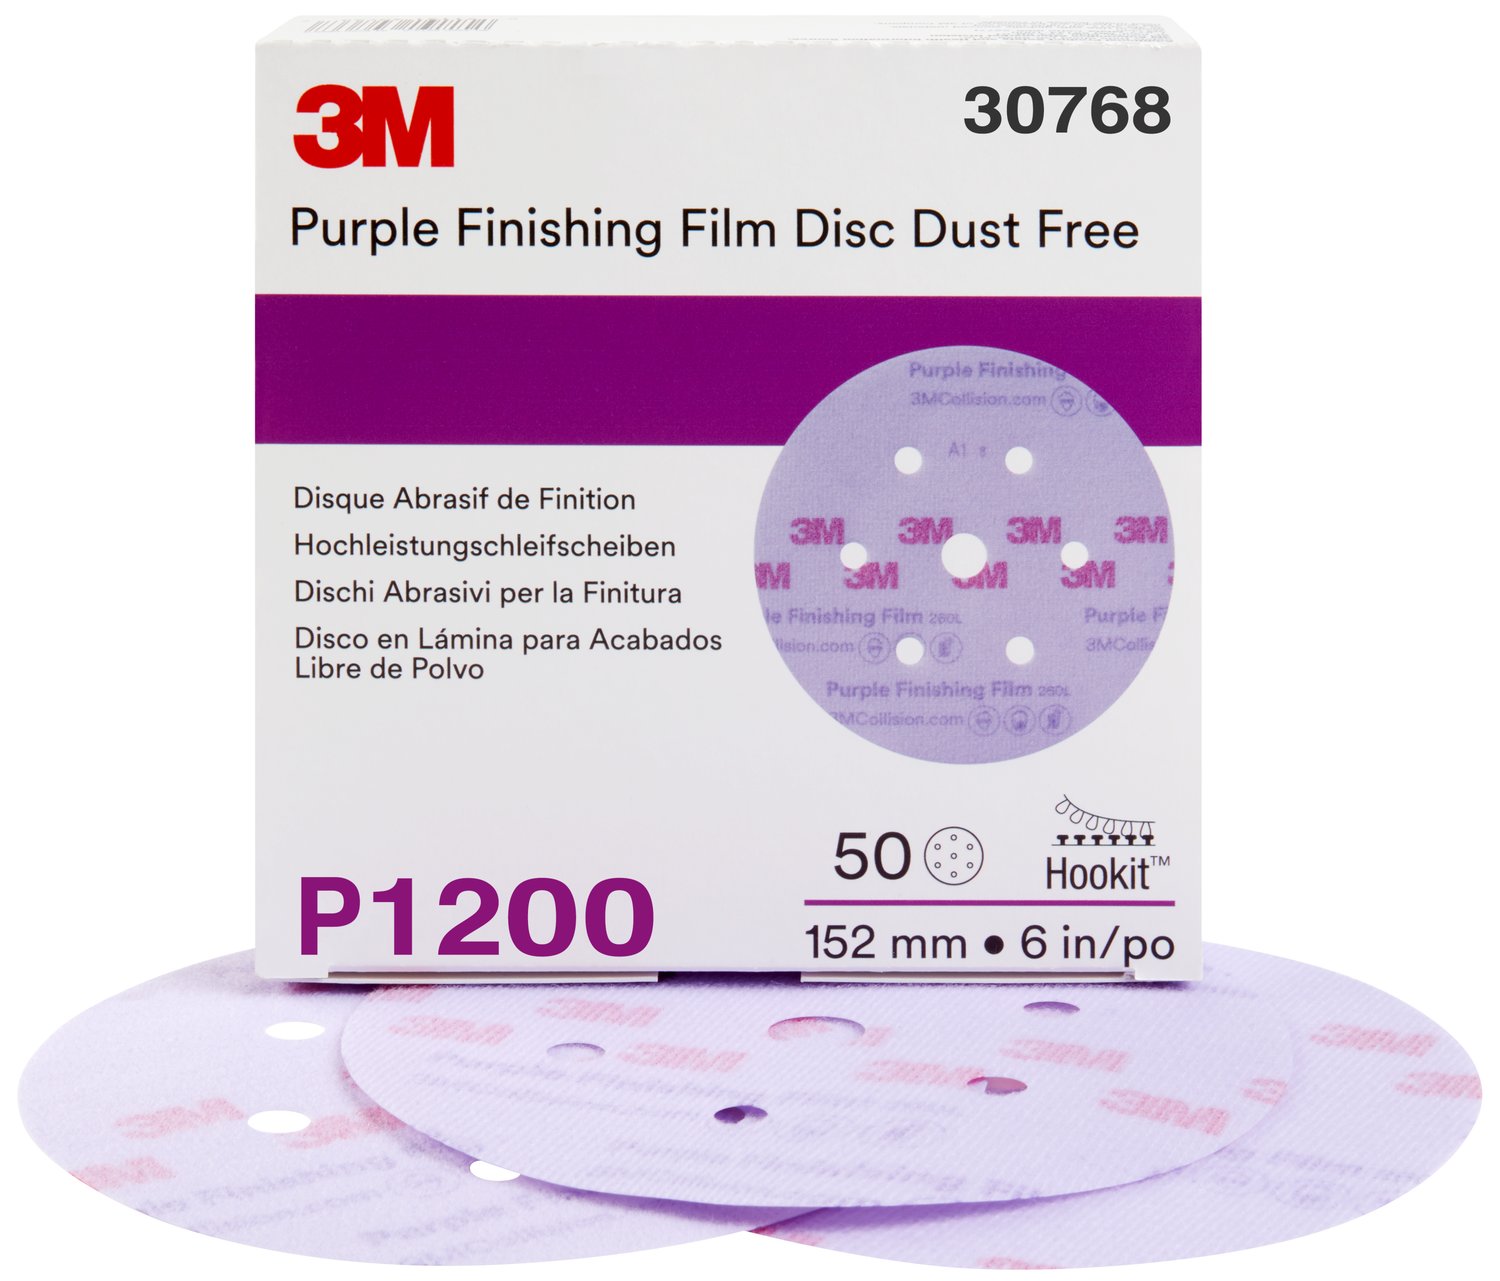 7100122777 - 3M Hookit Purple Finishing Film Abrasive Disc 260L, 30768, 6 in, Dust
Free, P1200, 50 discs per carton, 4 cartons per case